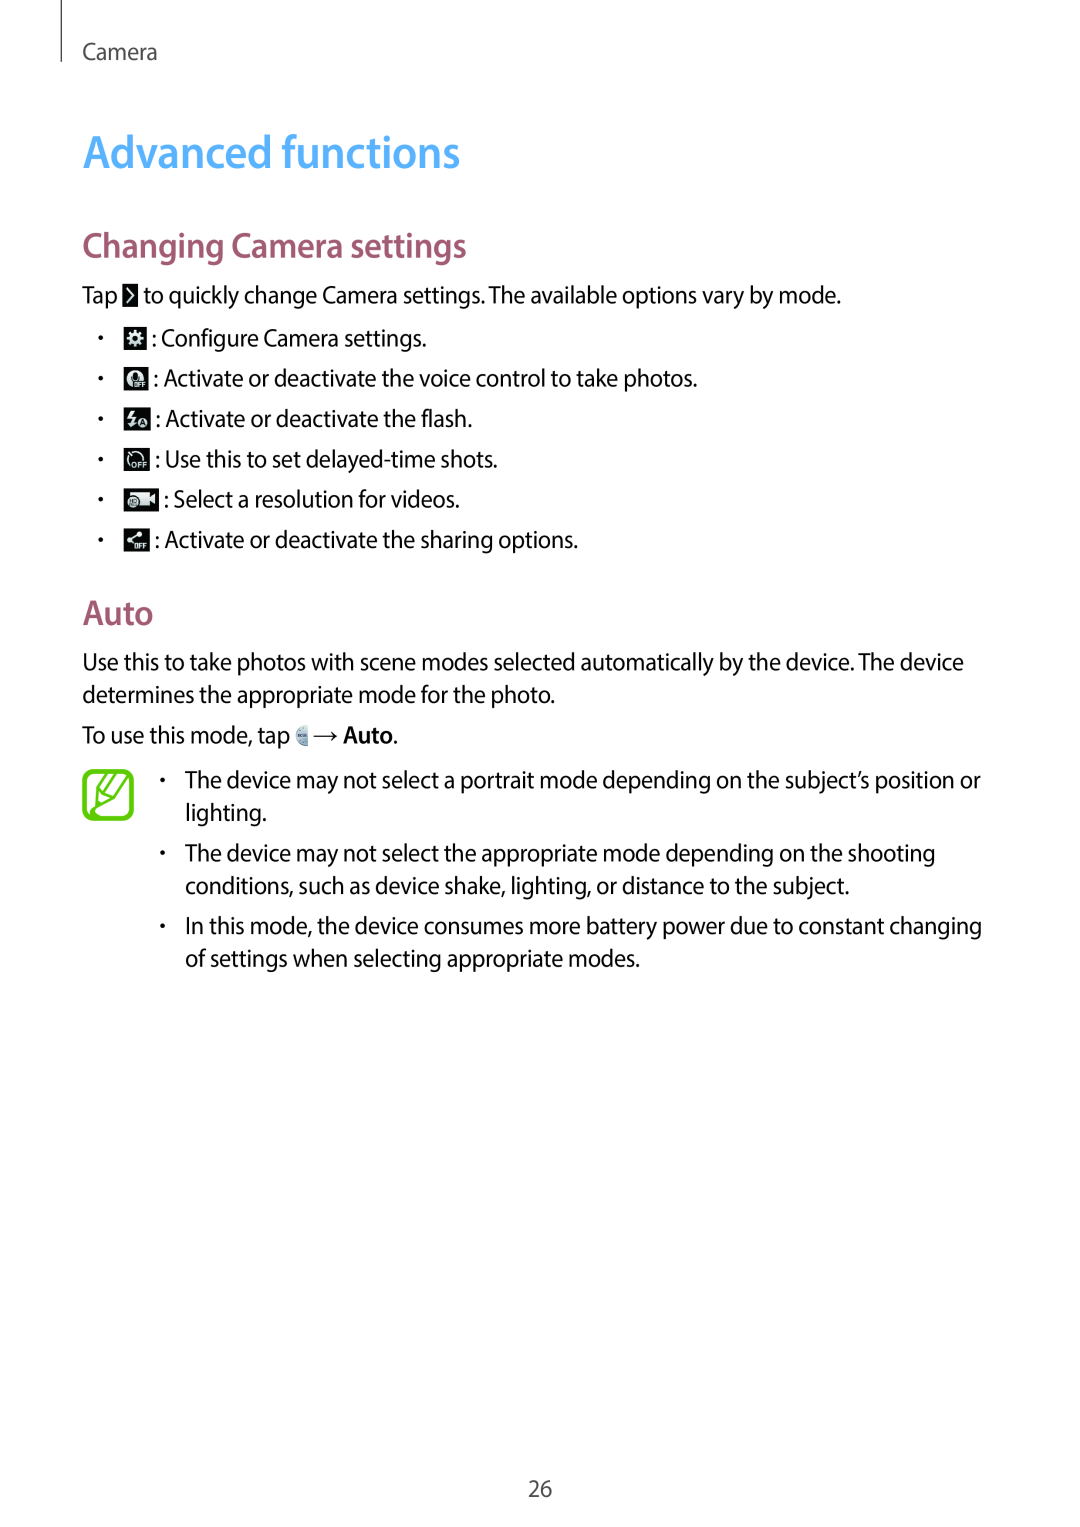 Samsung EK-GC100 user manual Advanced functions, Changing Camera settings, Auto 